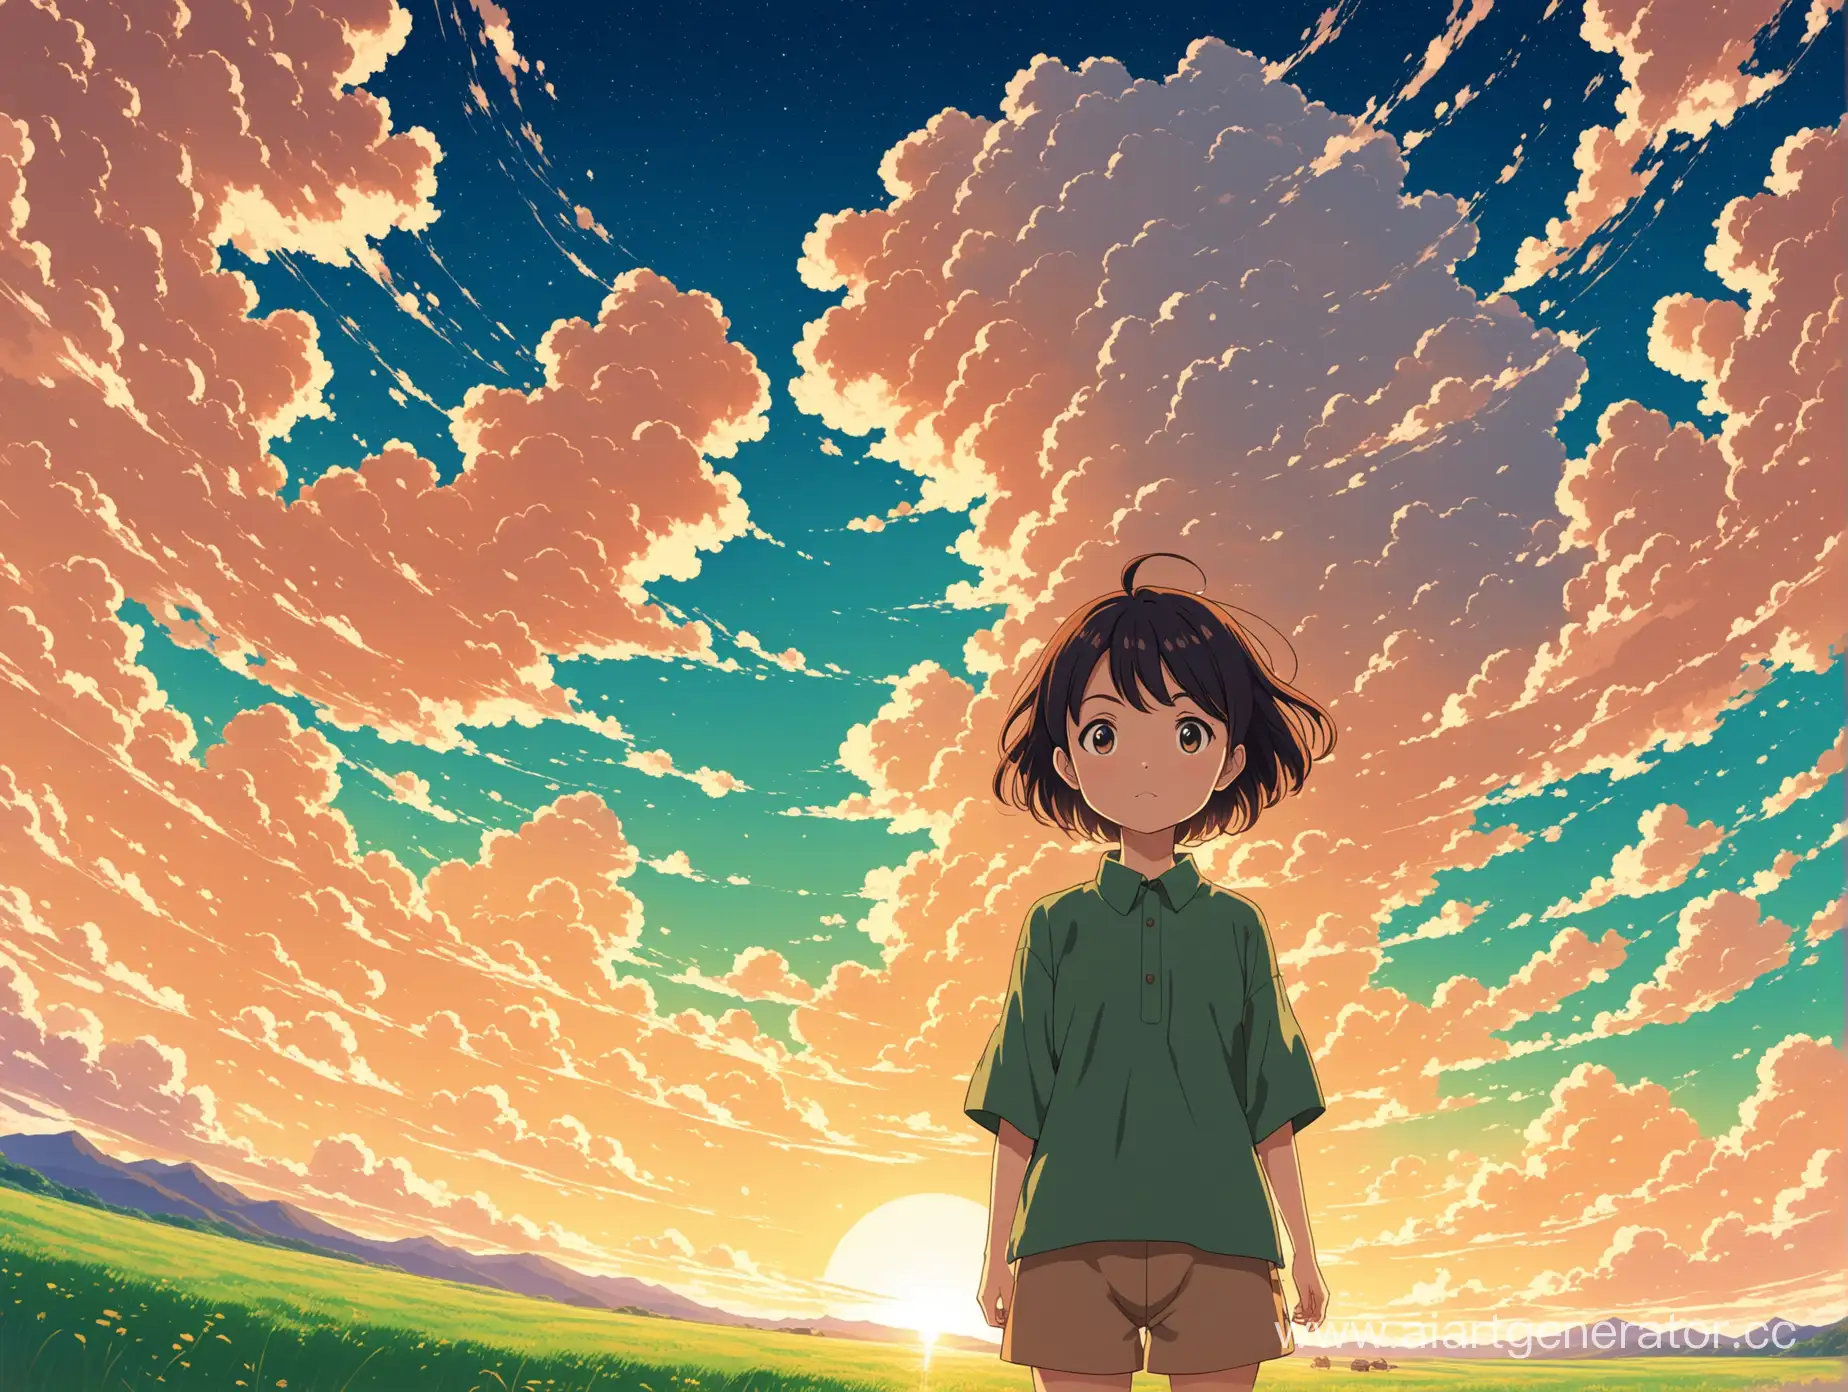 Whimsical-Anime-Art-Inspired-by-Hayao-Miyazakis-Style